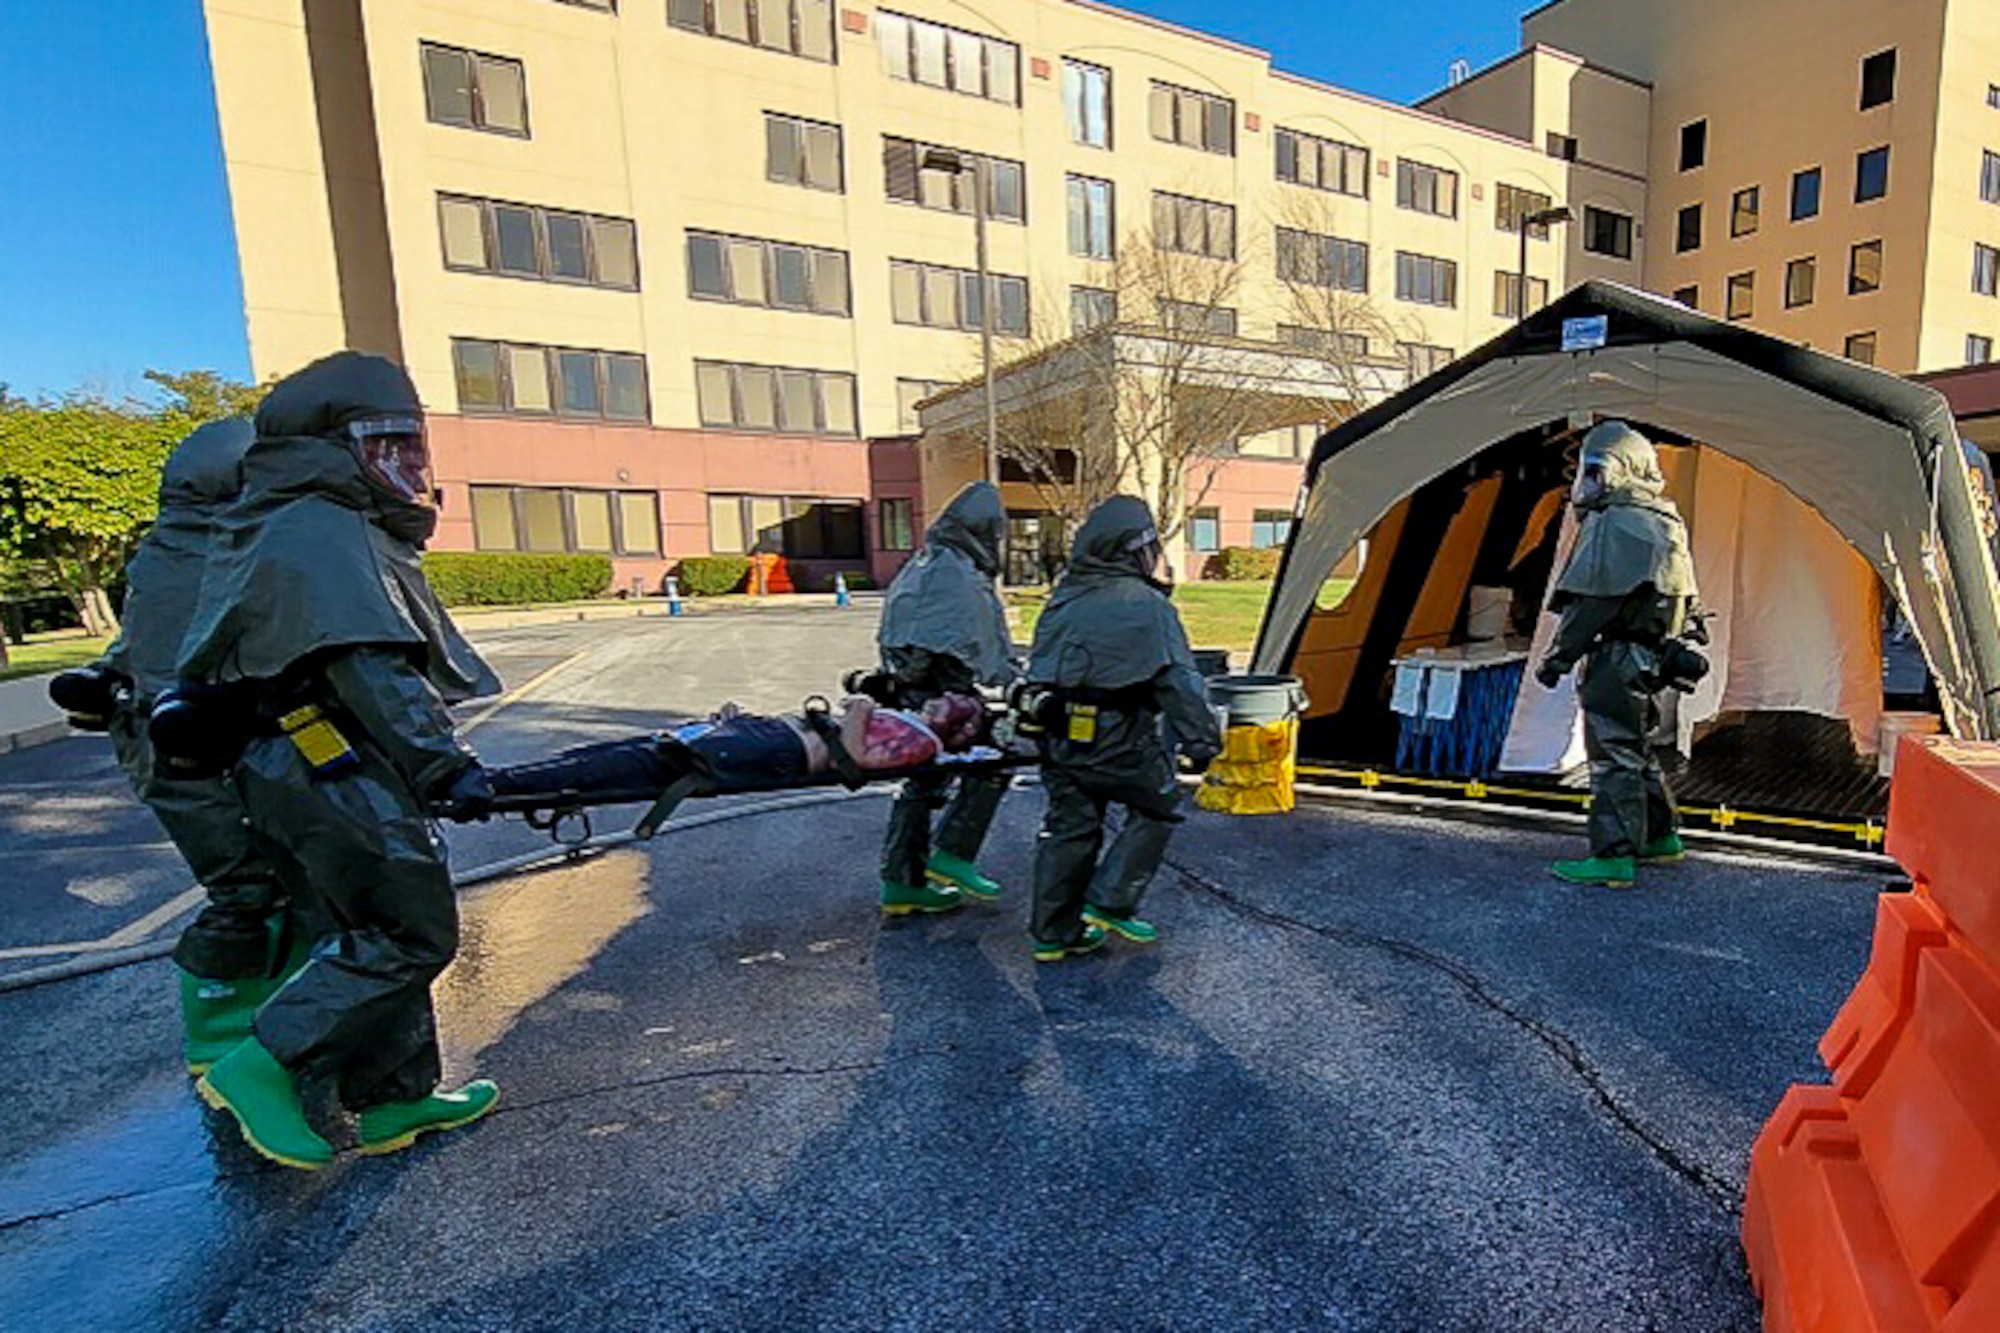 Medics in hazmat gear carry patient on stretcher